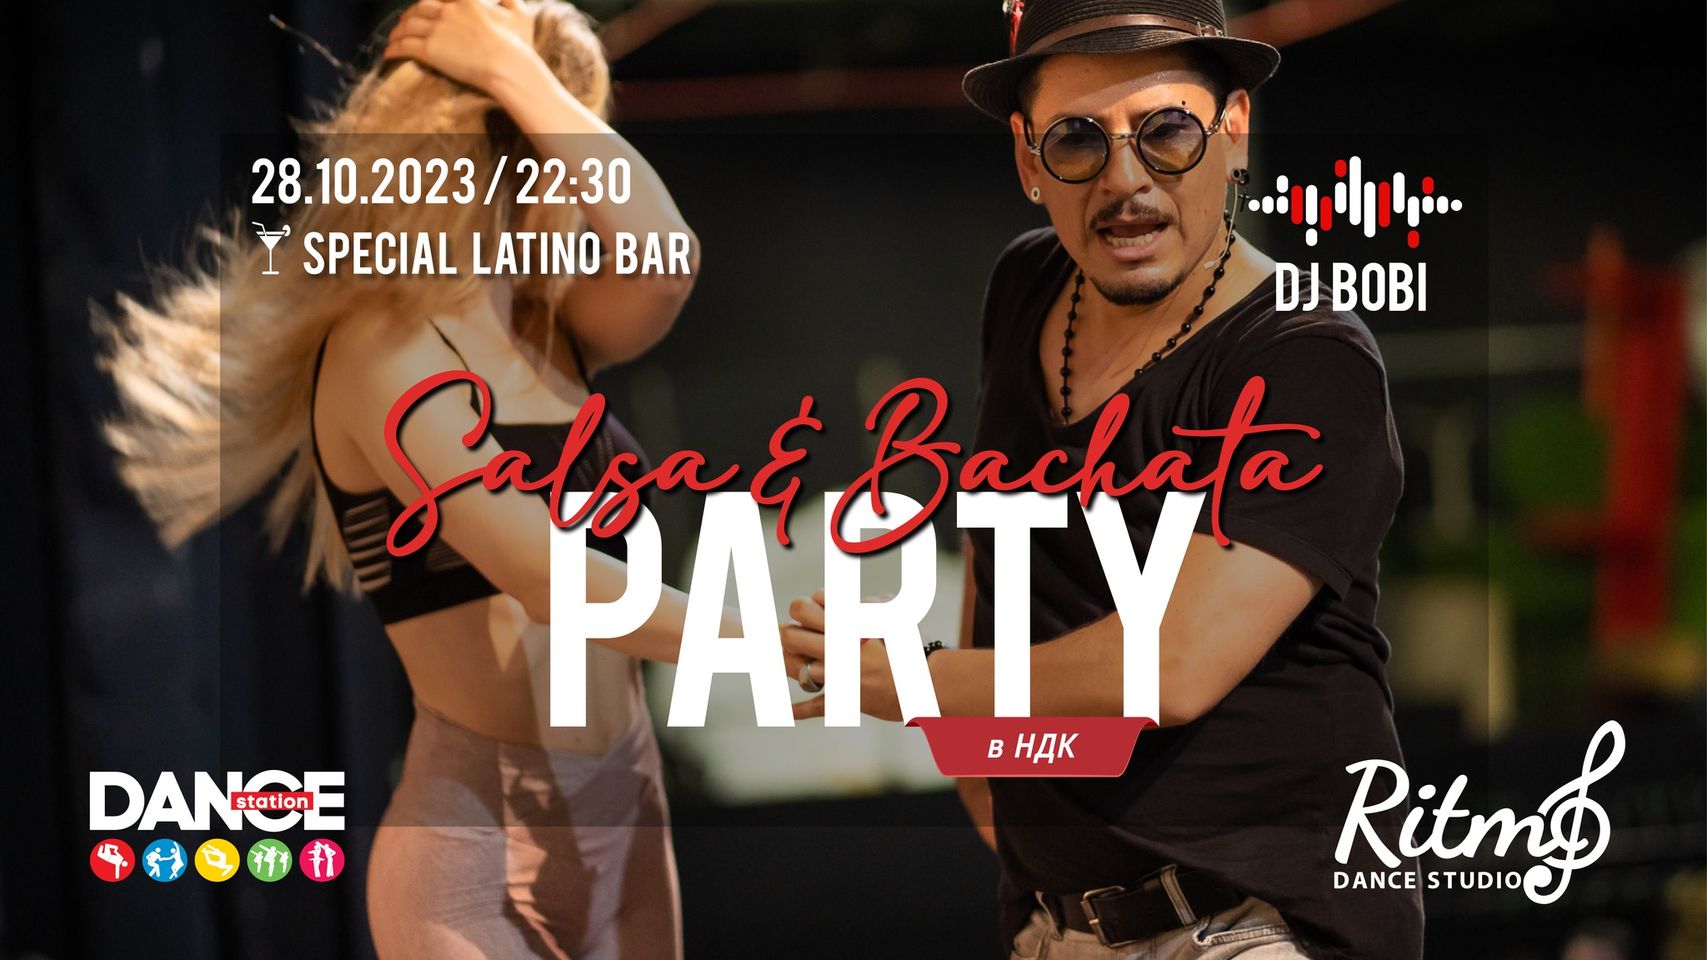 Ritmo Dance Studio - Salsa and Bachata Party @ NDK Sofia